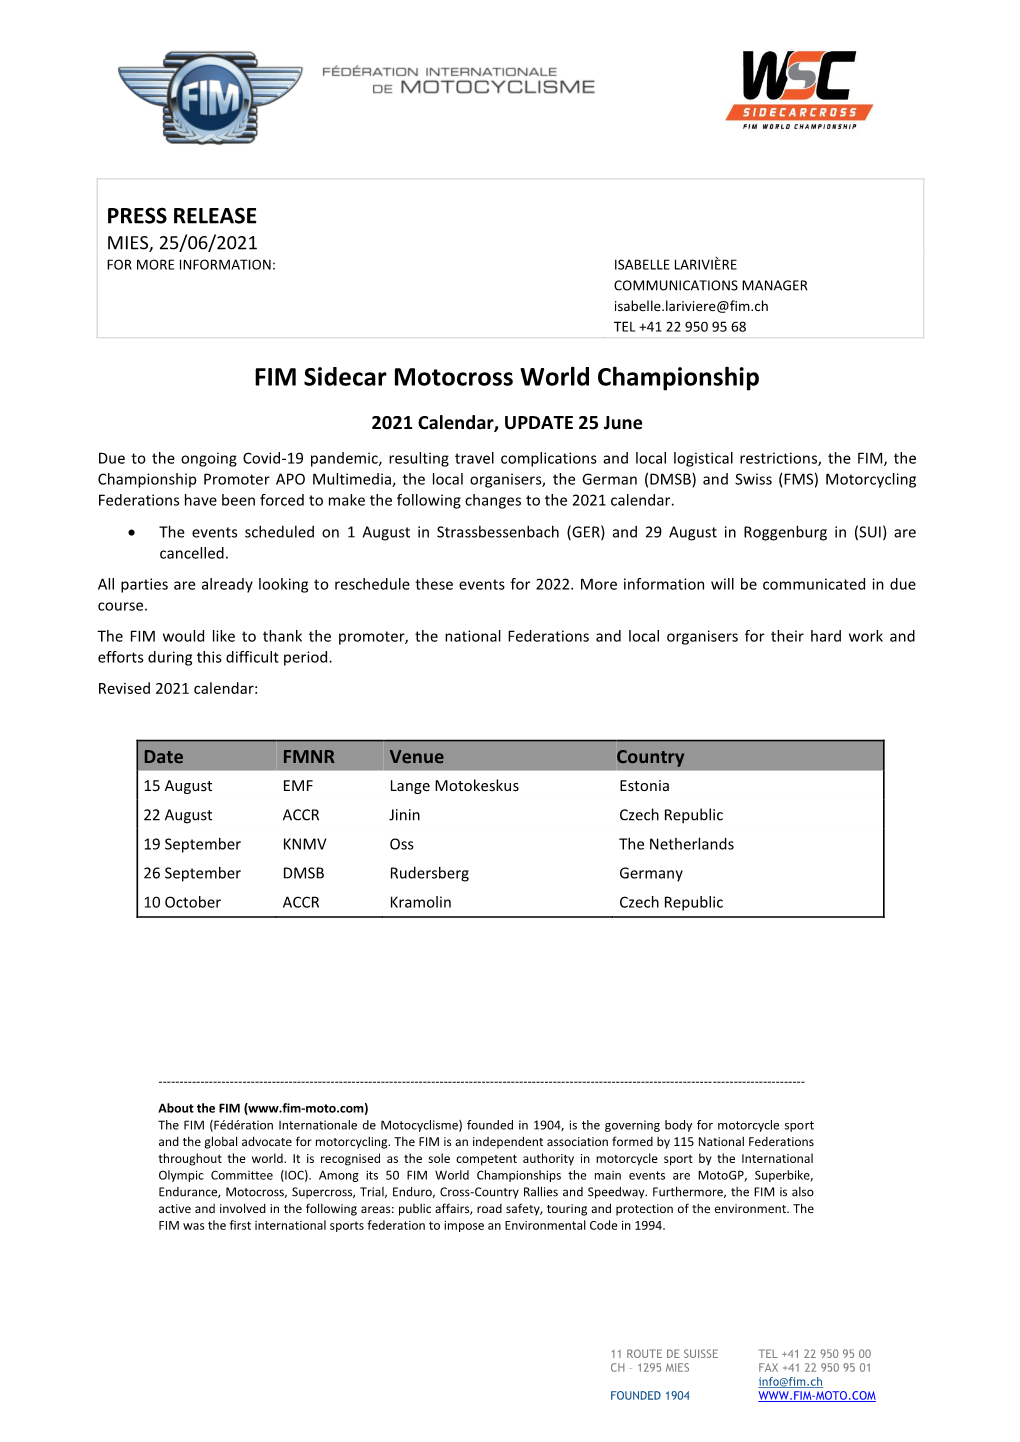 FIM Sidecar Motocross World Championship